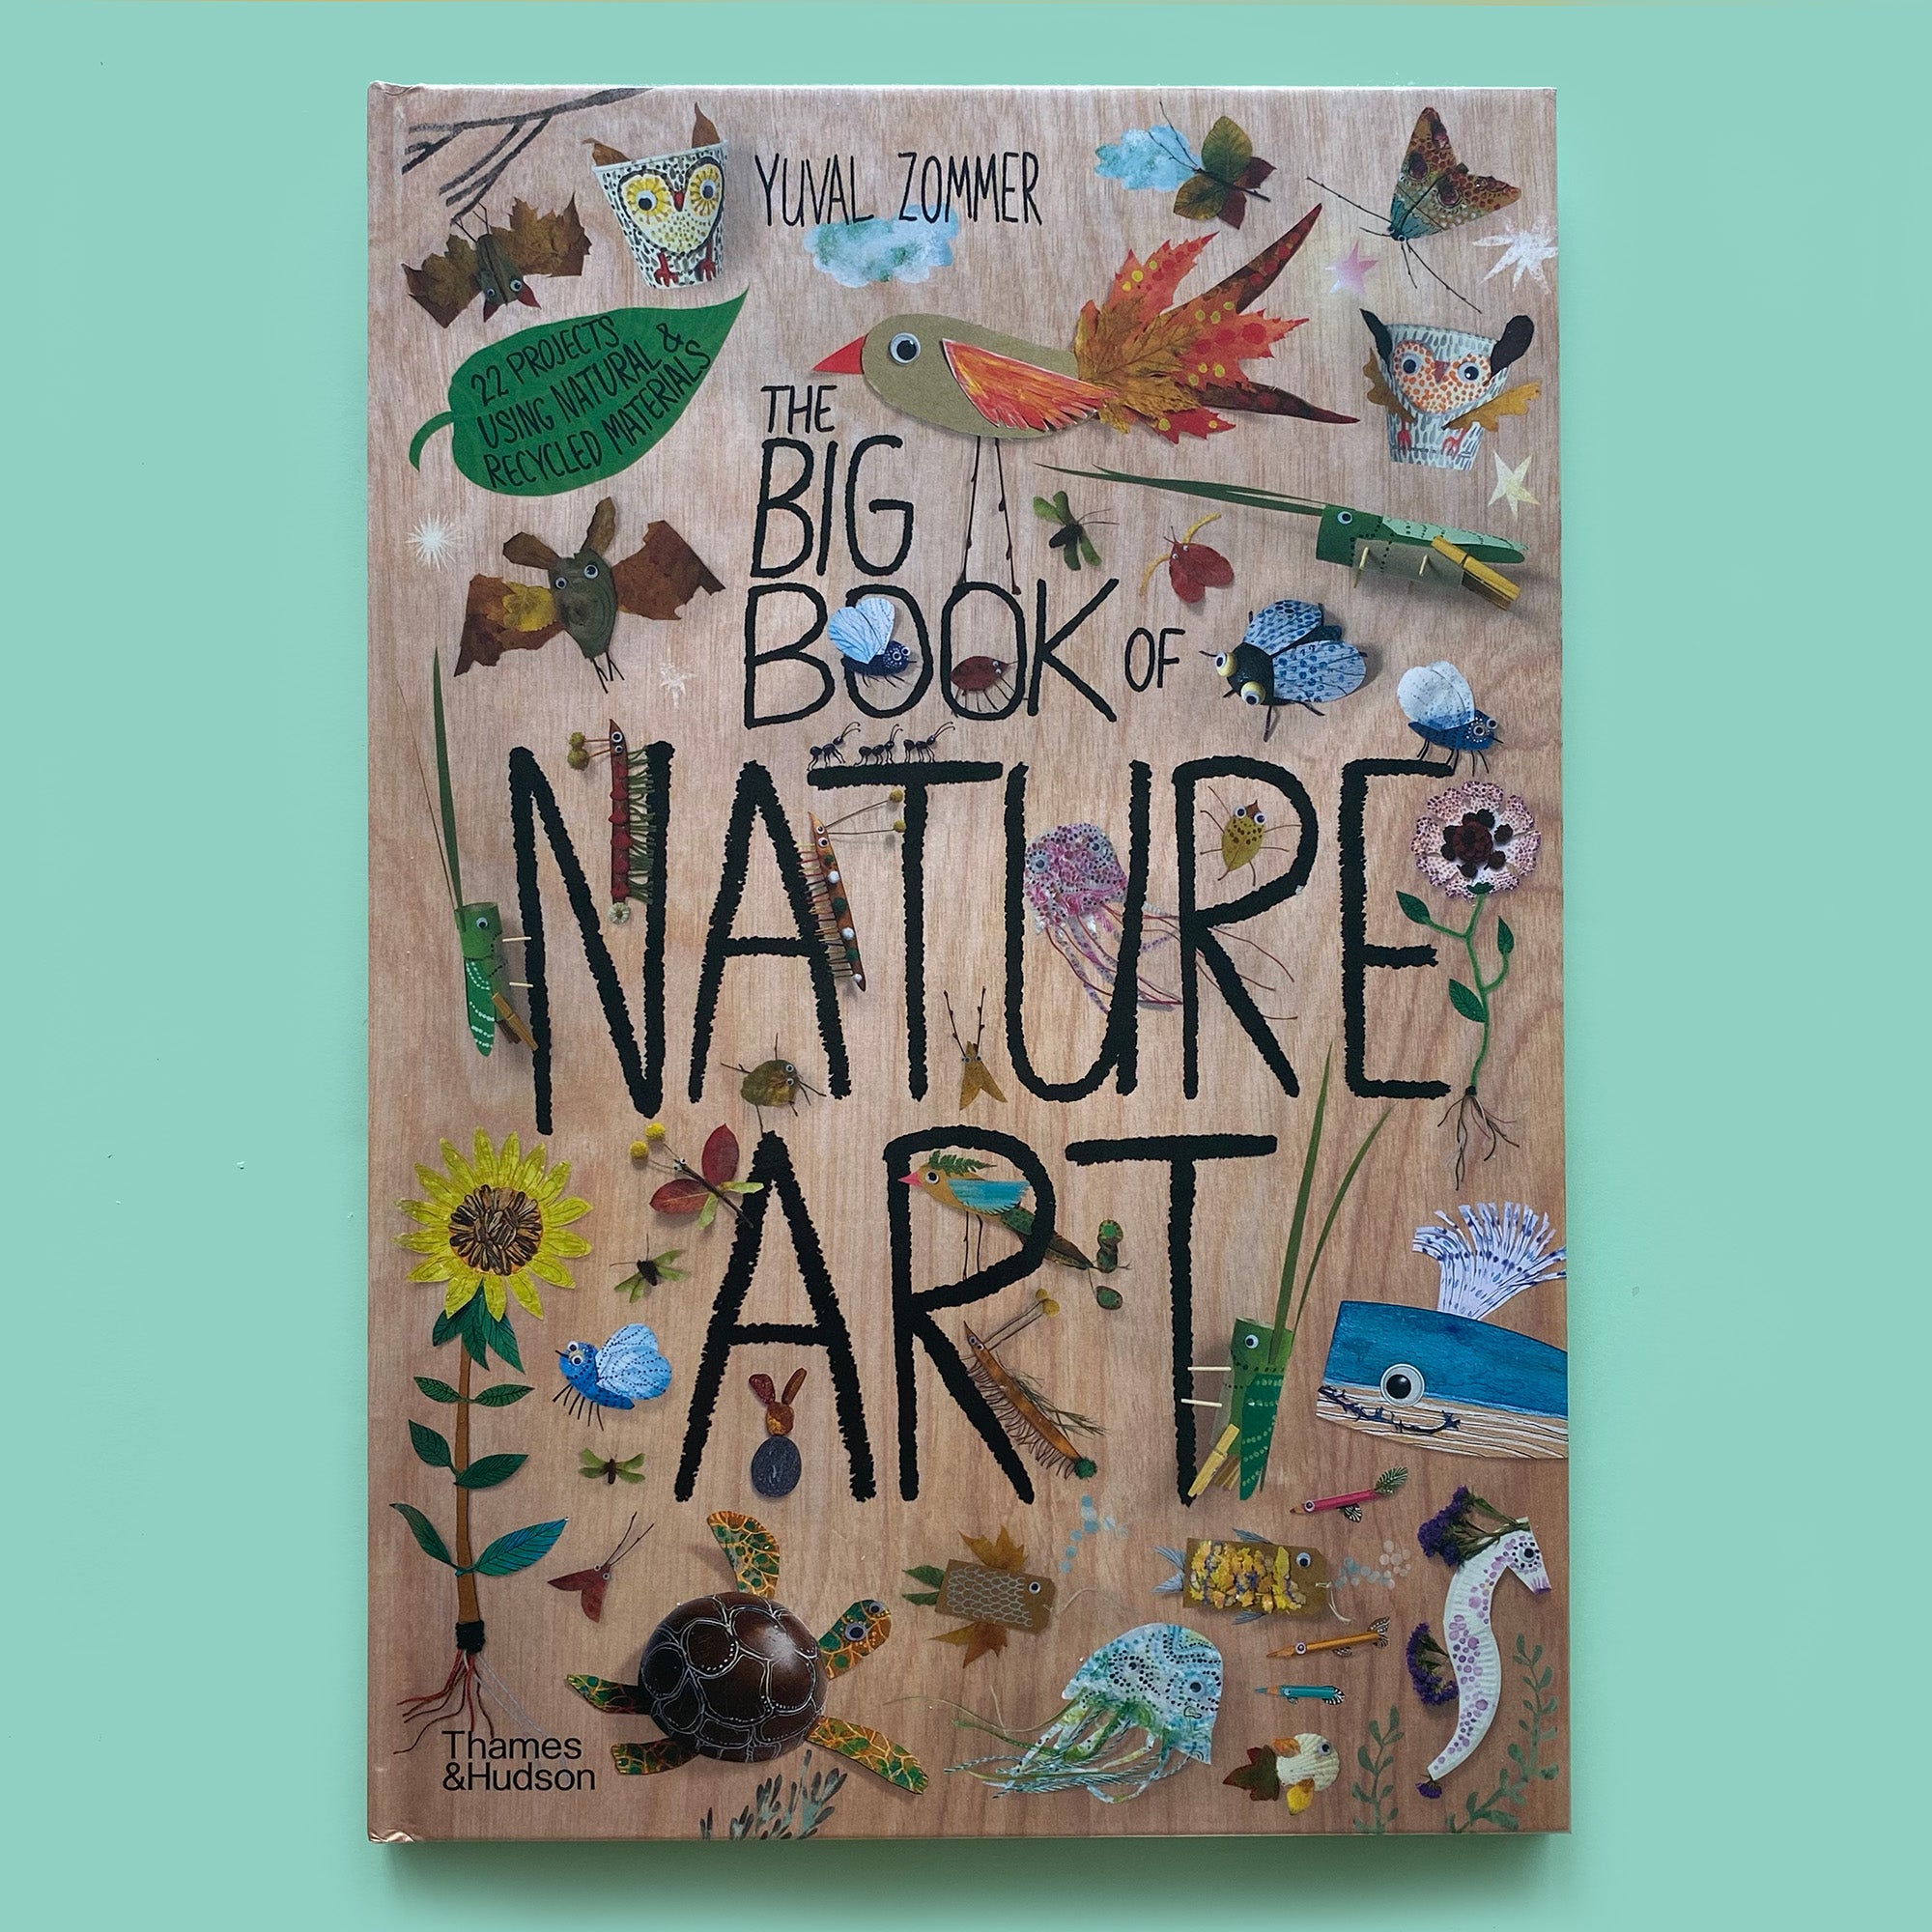 NATURE Arts and Crafts KIDS Nature Art Printables Nature Art Digital  Download Nature Craft Printable Nature Crafts for Kids 